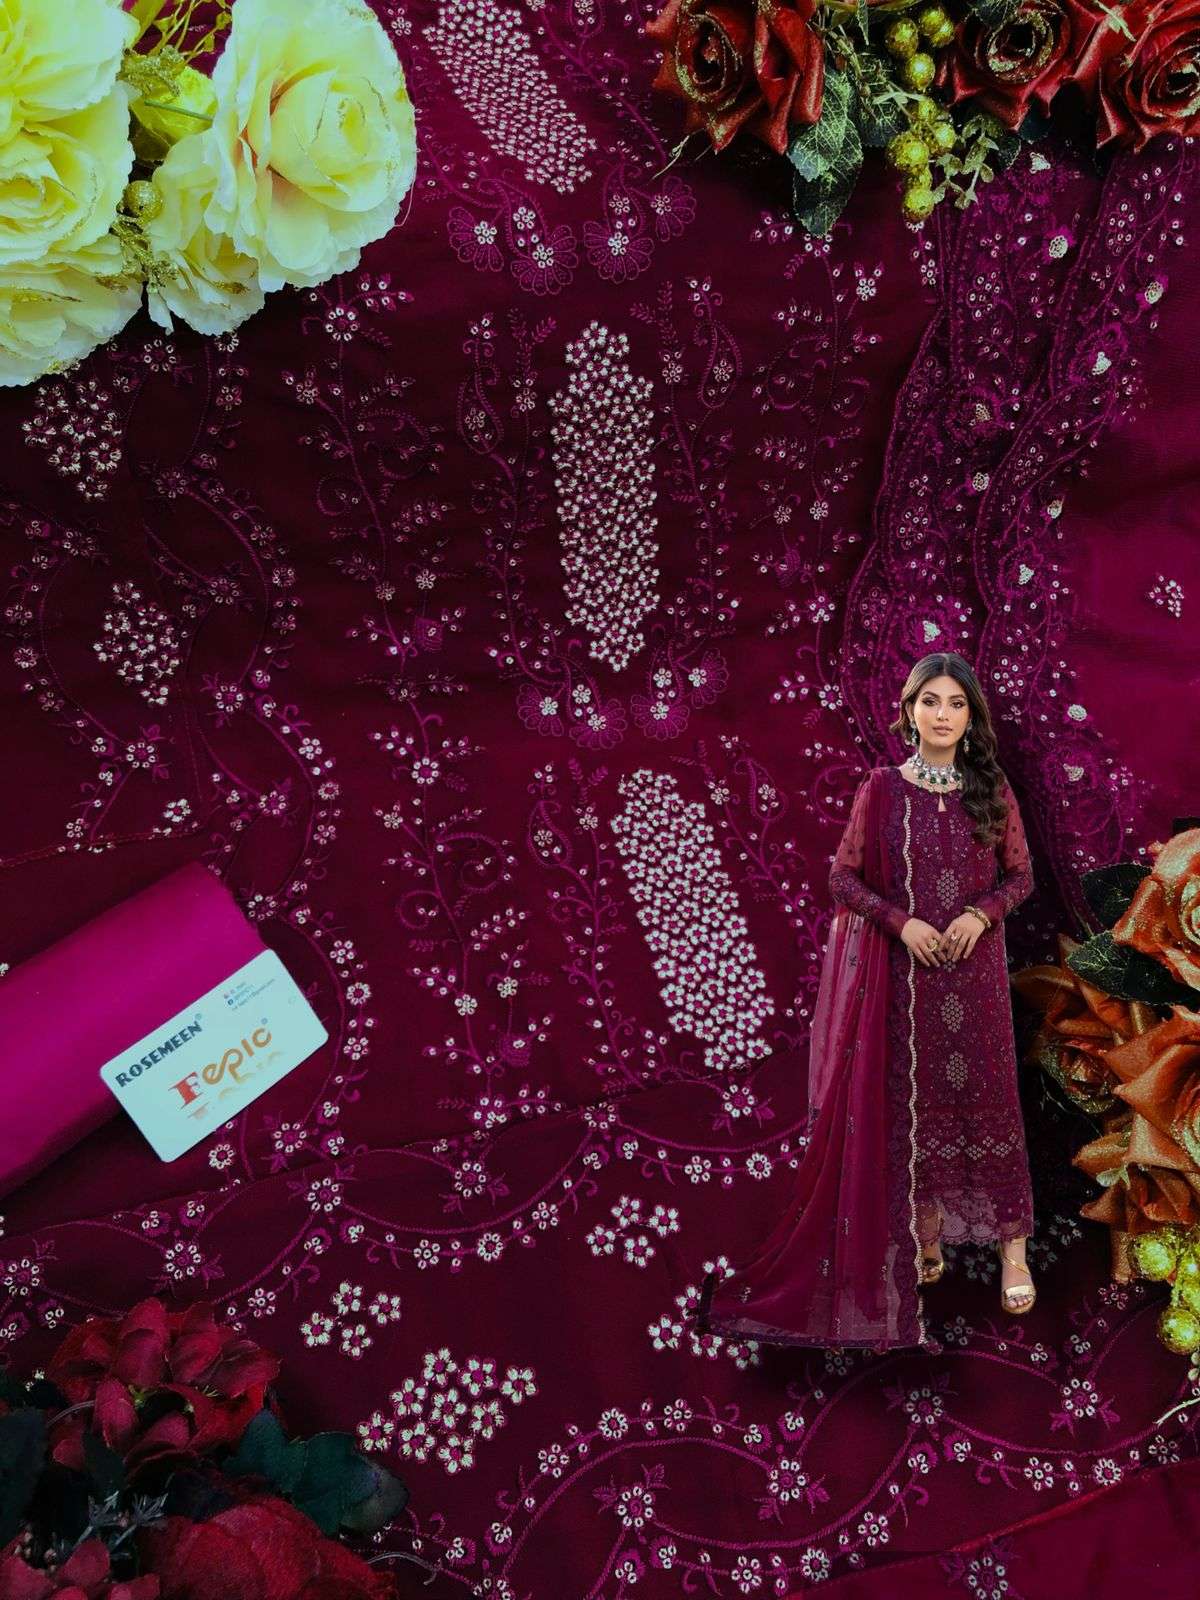 Rosemeen By Fepic Designer Wholesale Online Salwar Suit Set